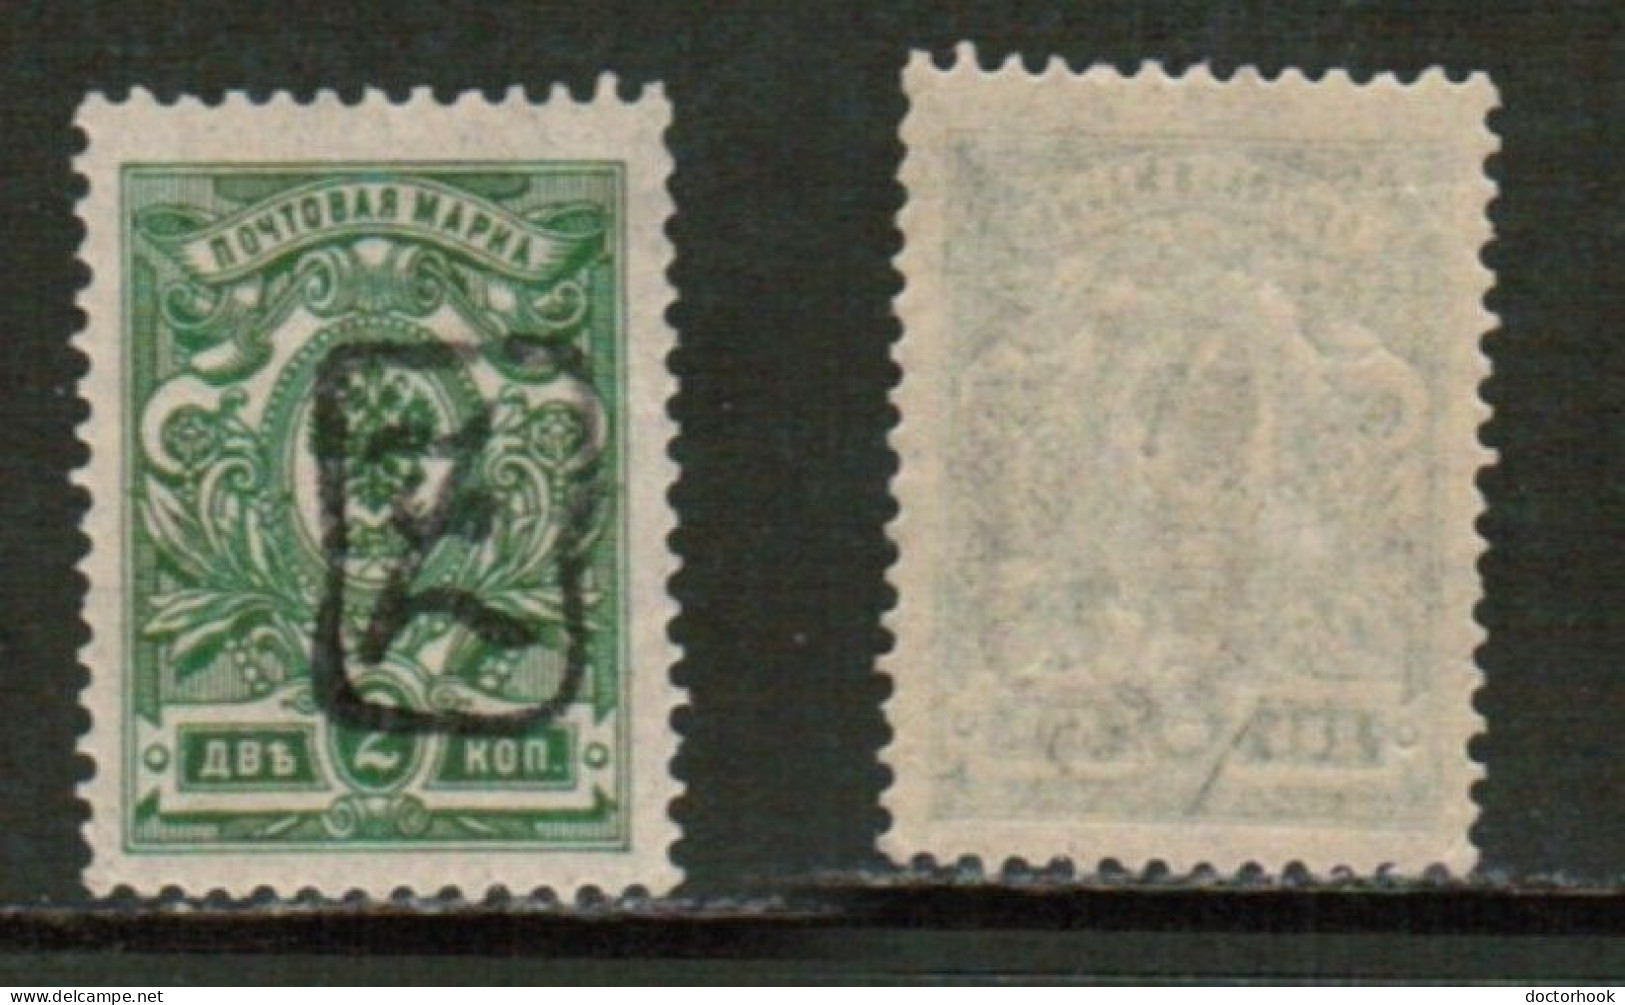 ARMANIA   Scott # 31a** MINT NH (CONDITION AS PER SCAN) (Stamp Scan # 920-5) - Armenië